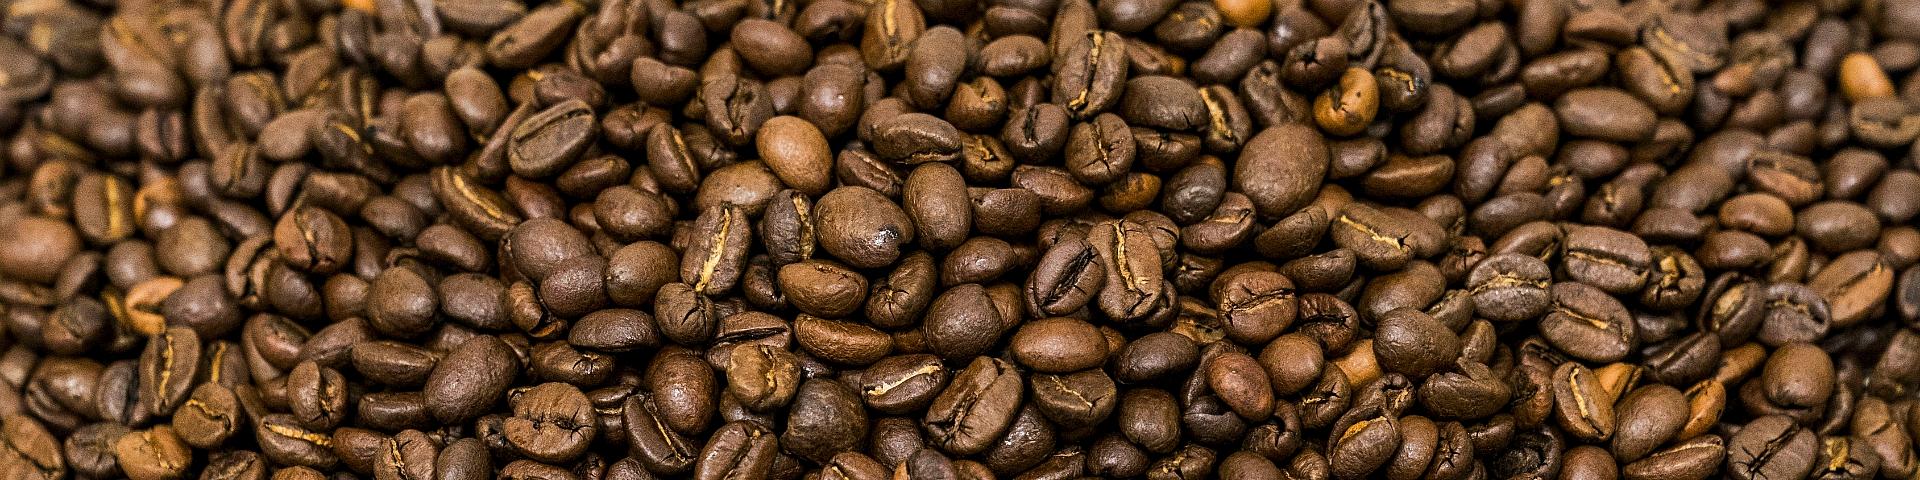 Exporting coffee to Europe | CBI 